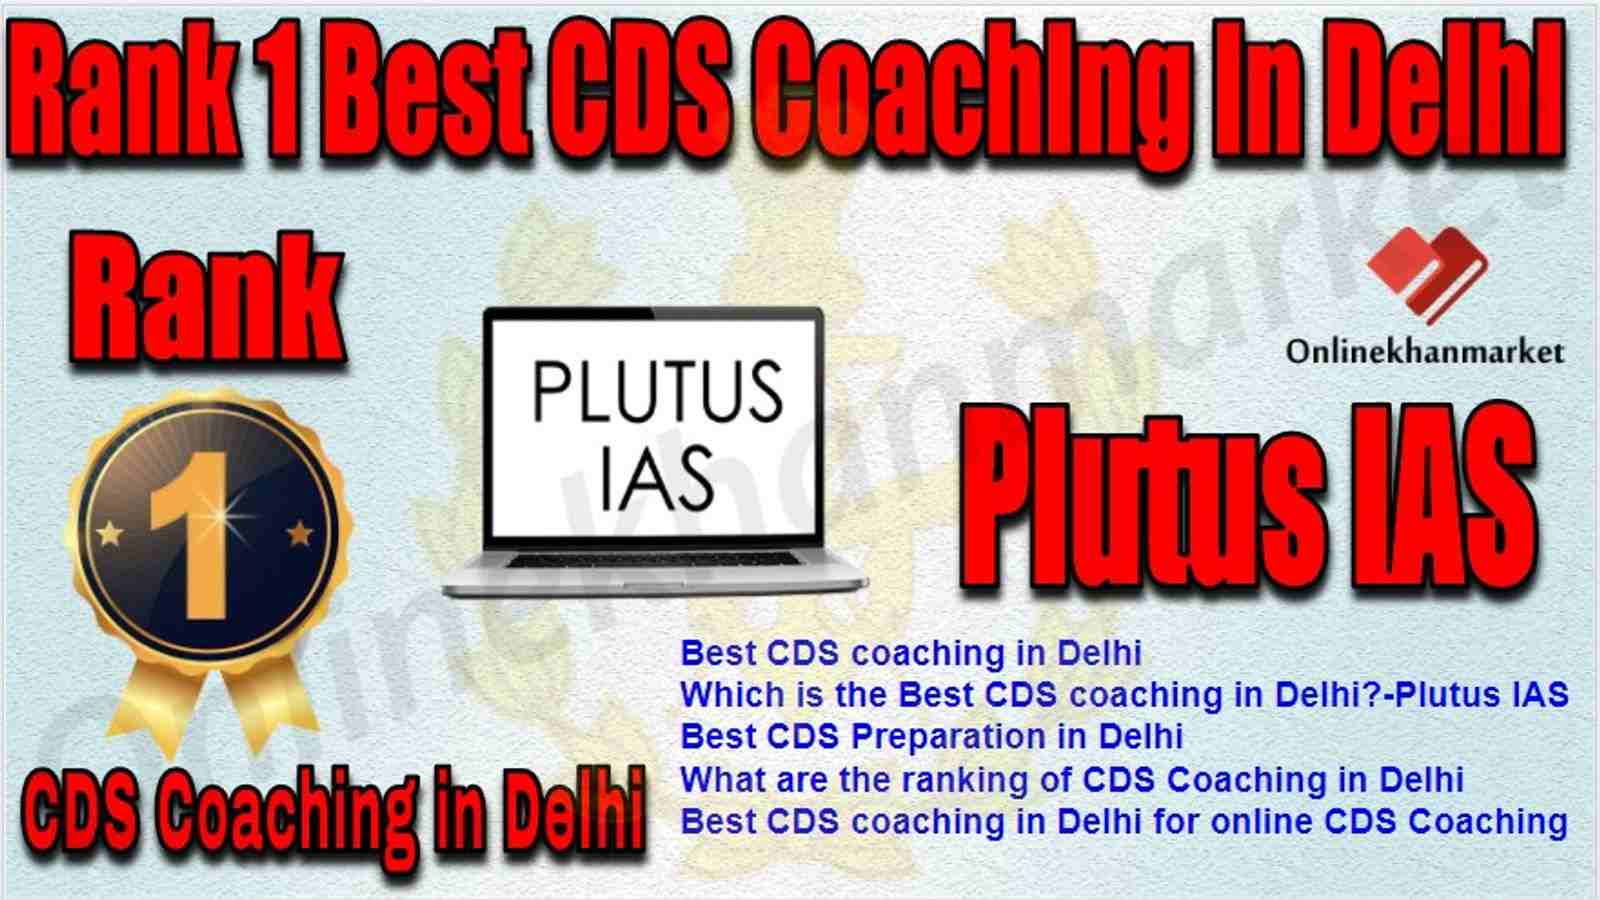 Rank 1 CDS Coaching in delhi